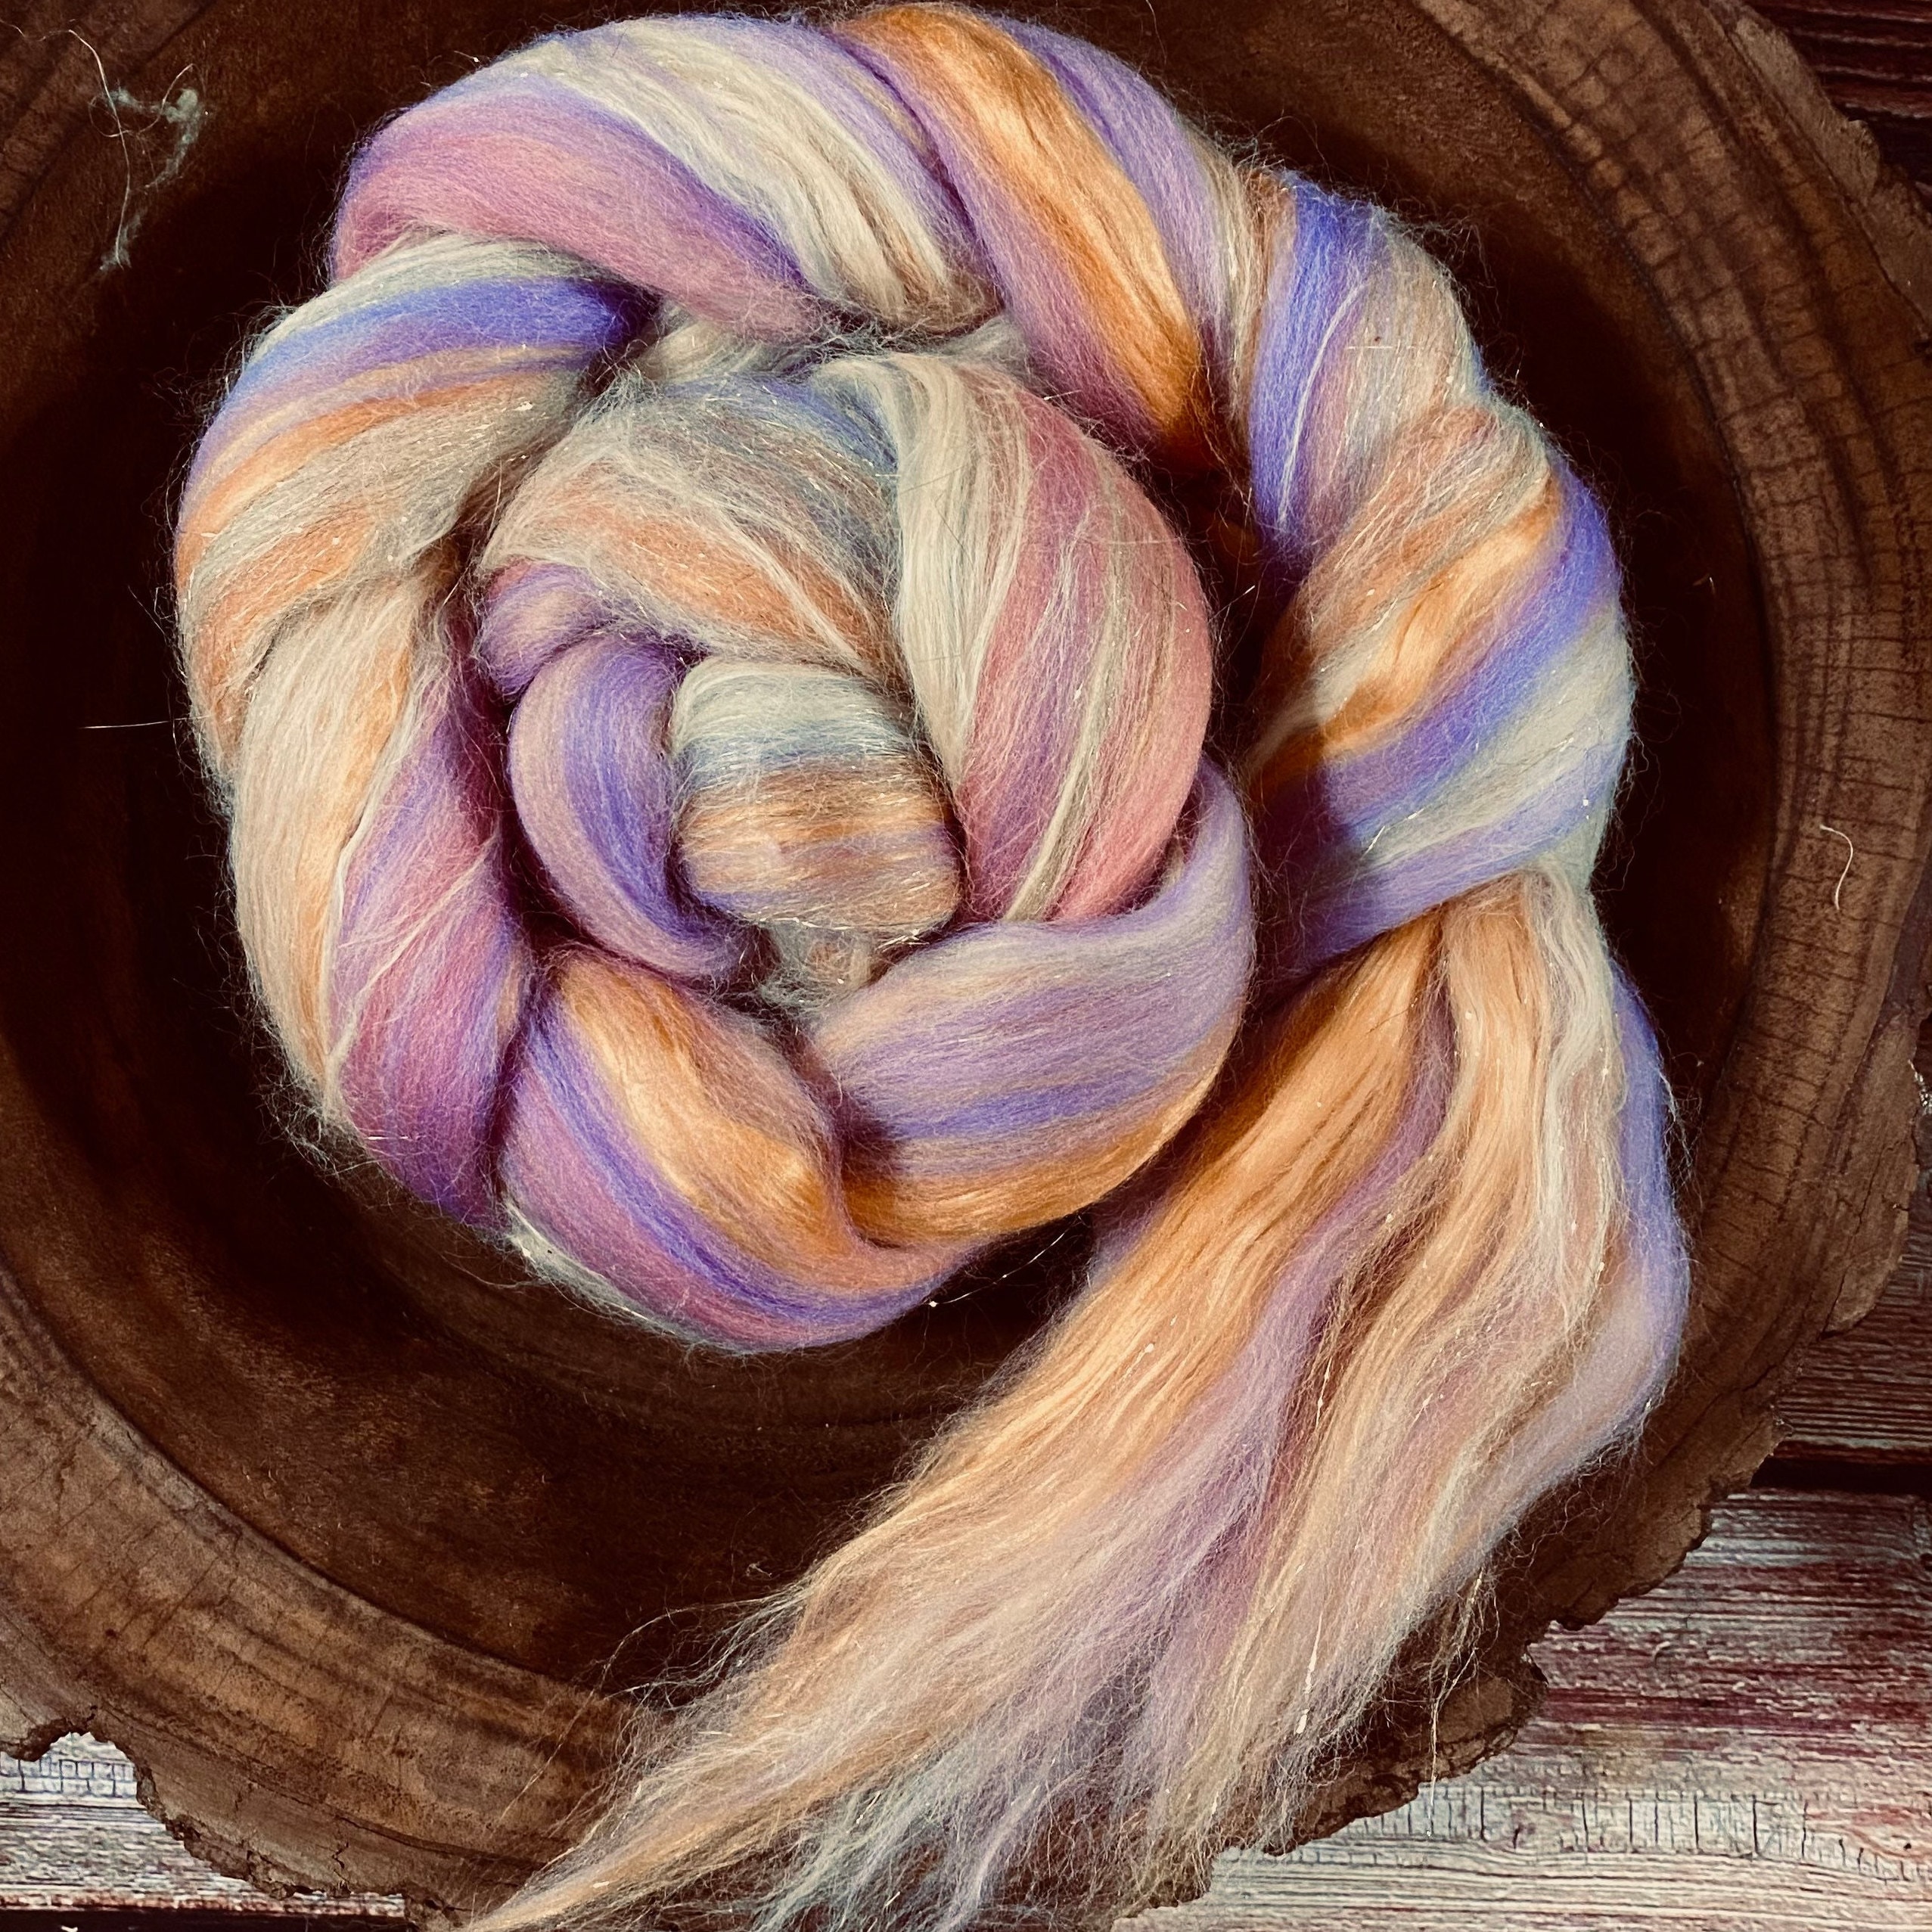 Heather Giant Yarn. Arm Knitting Merino Wool. Roving For Spinning